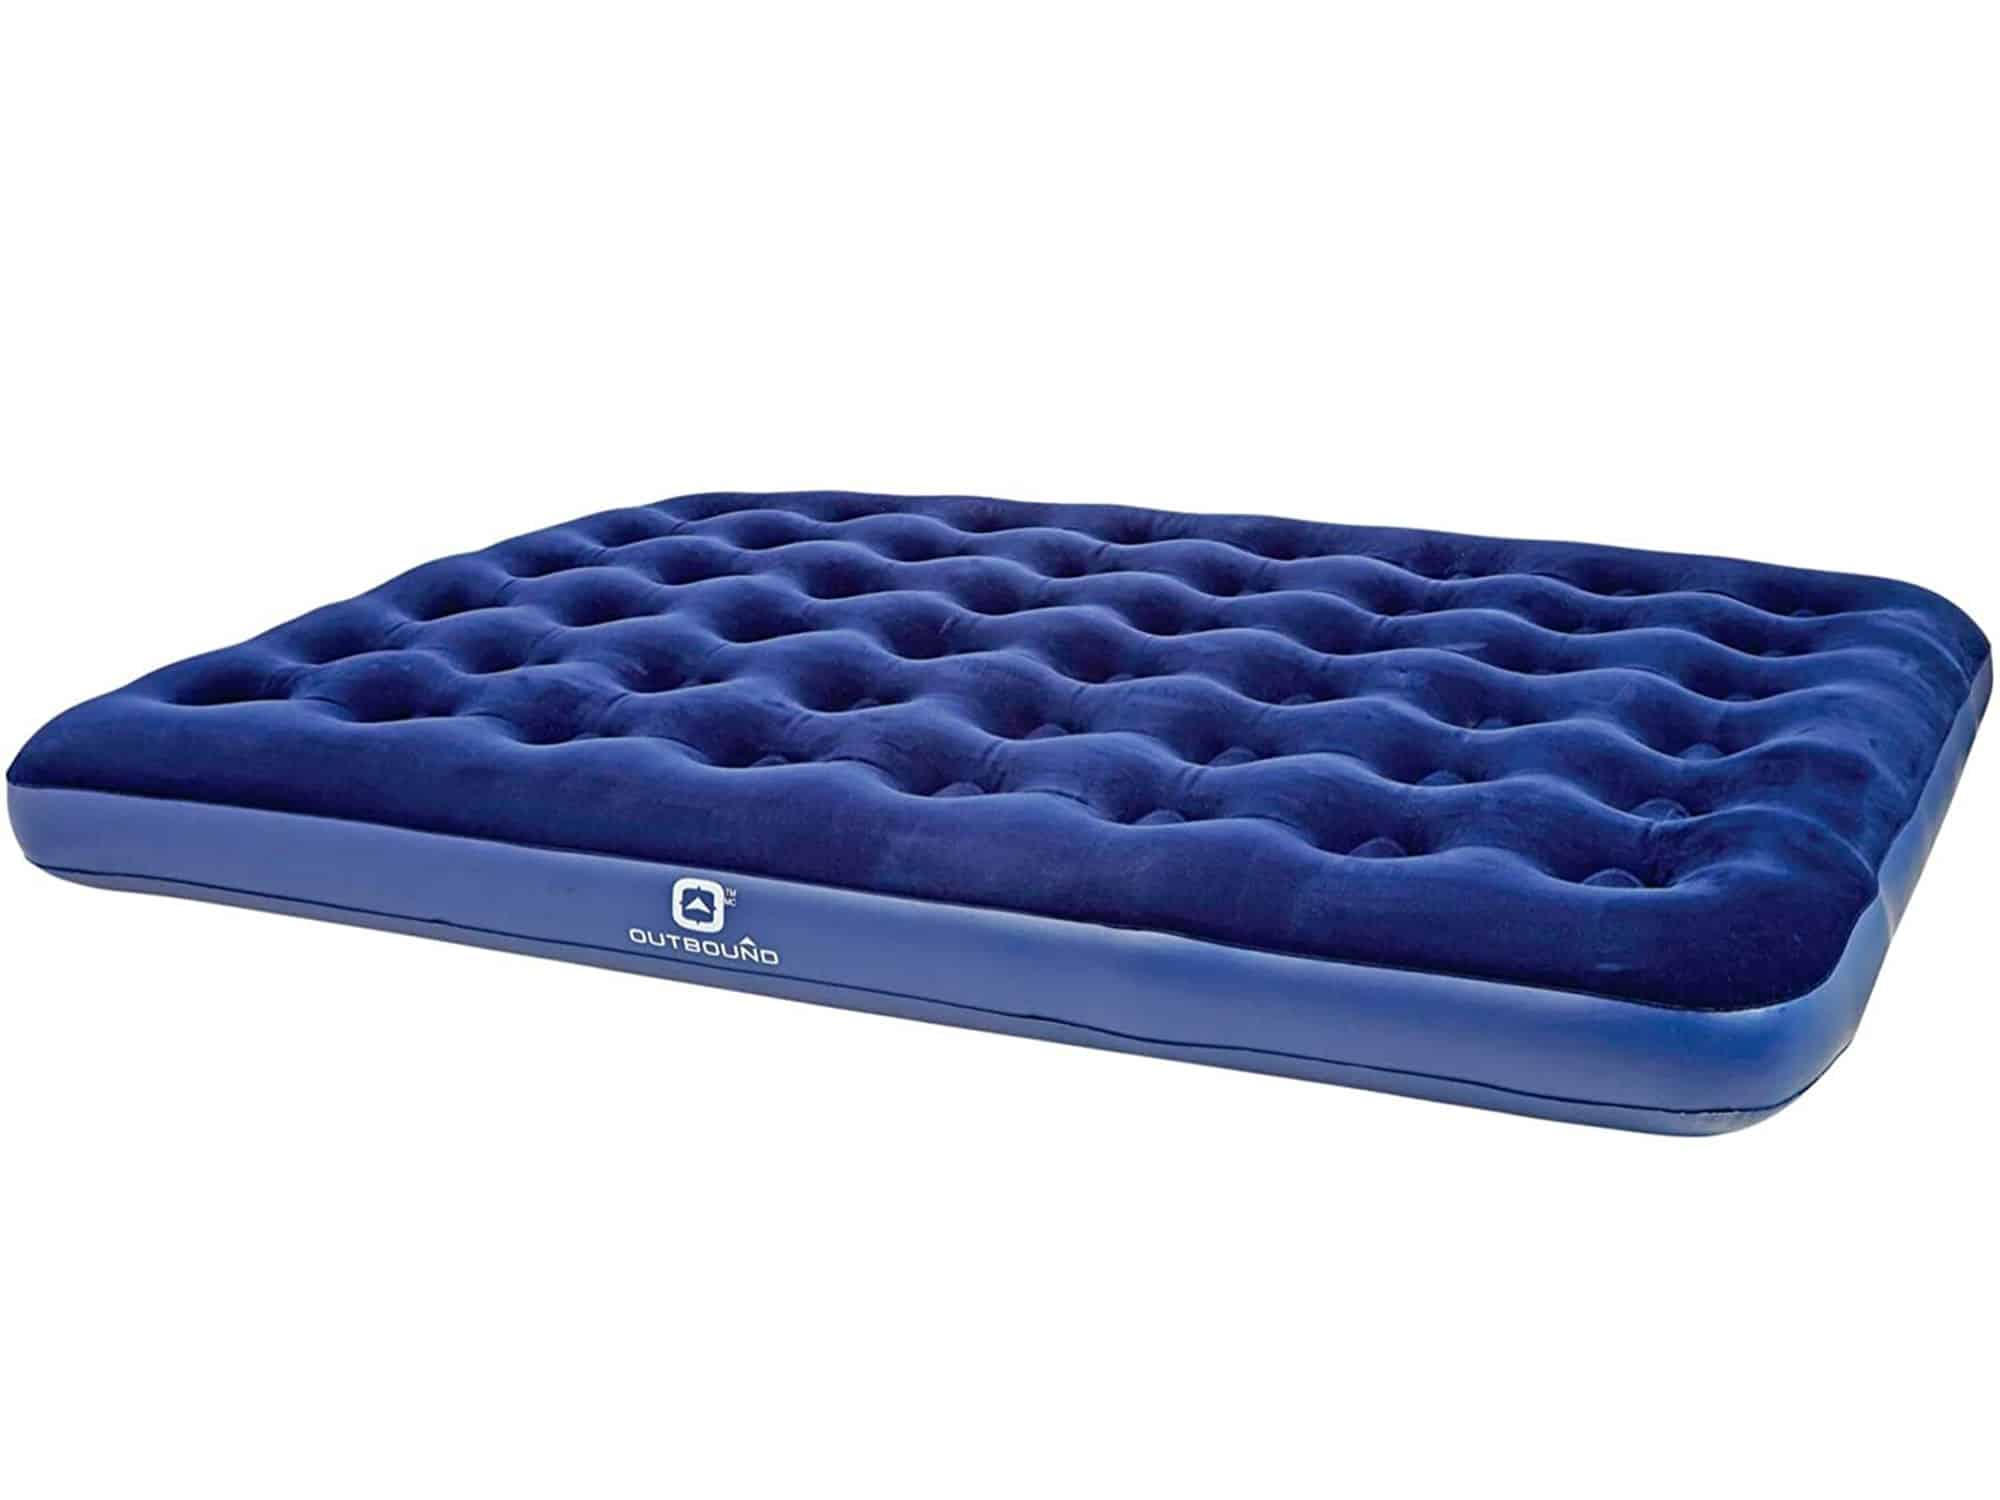 Outbound mattress